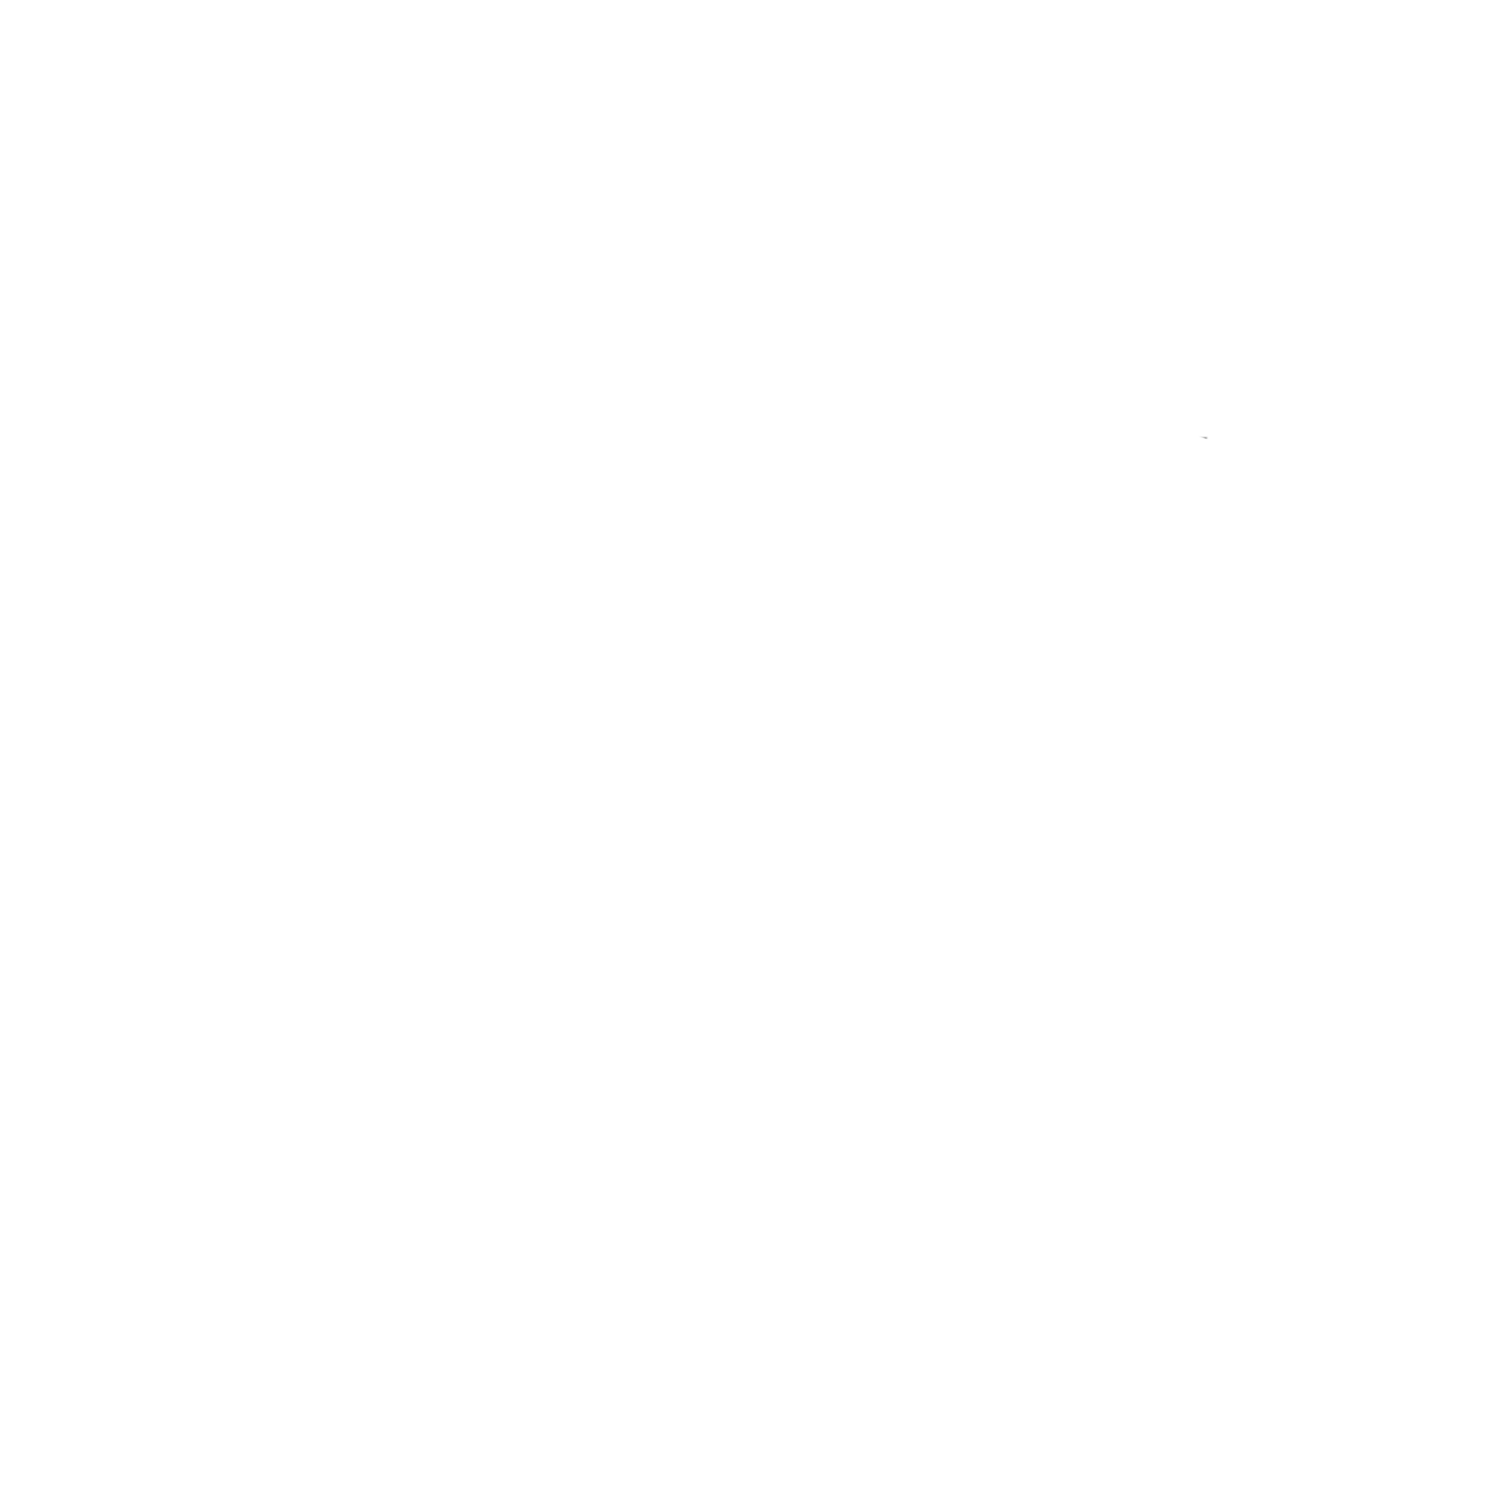 MARZ Images